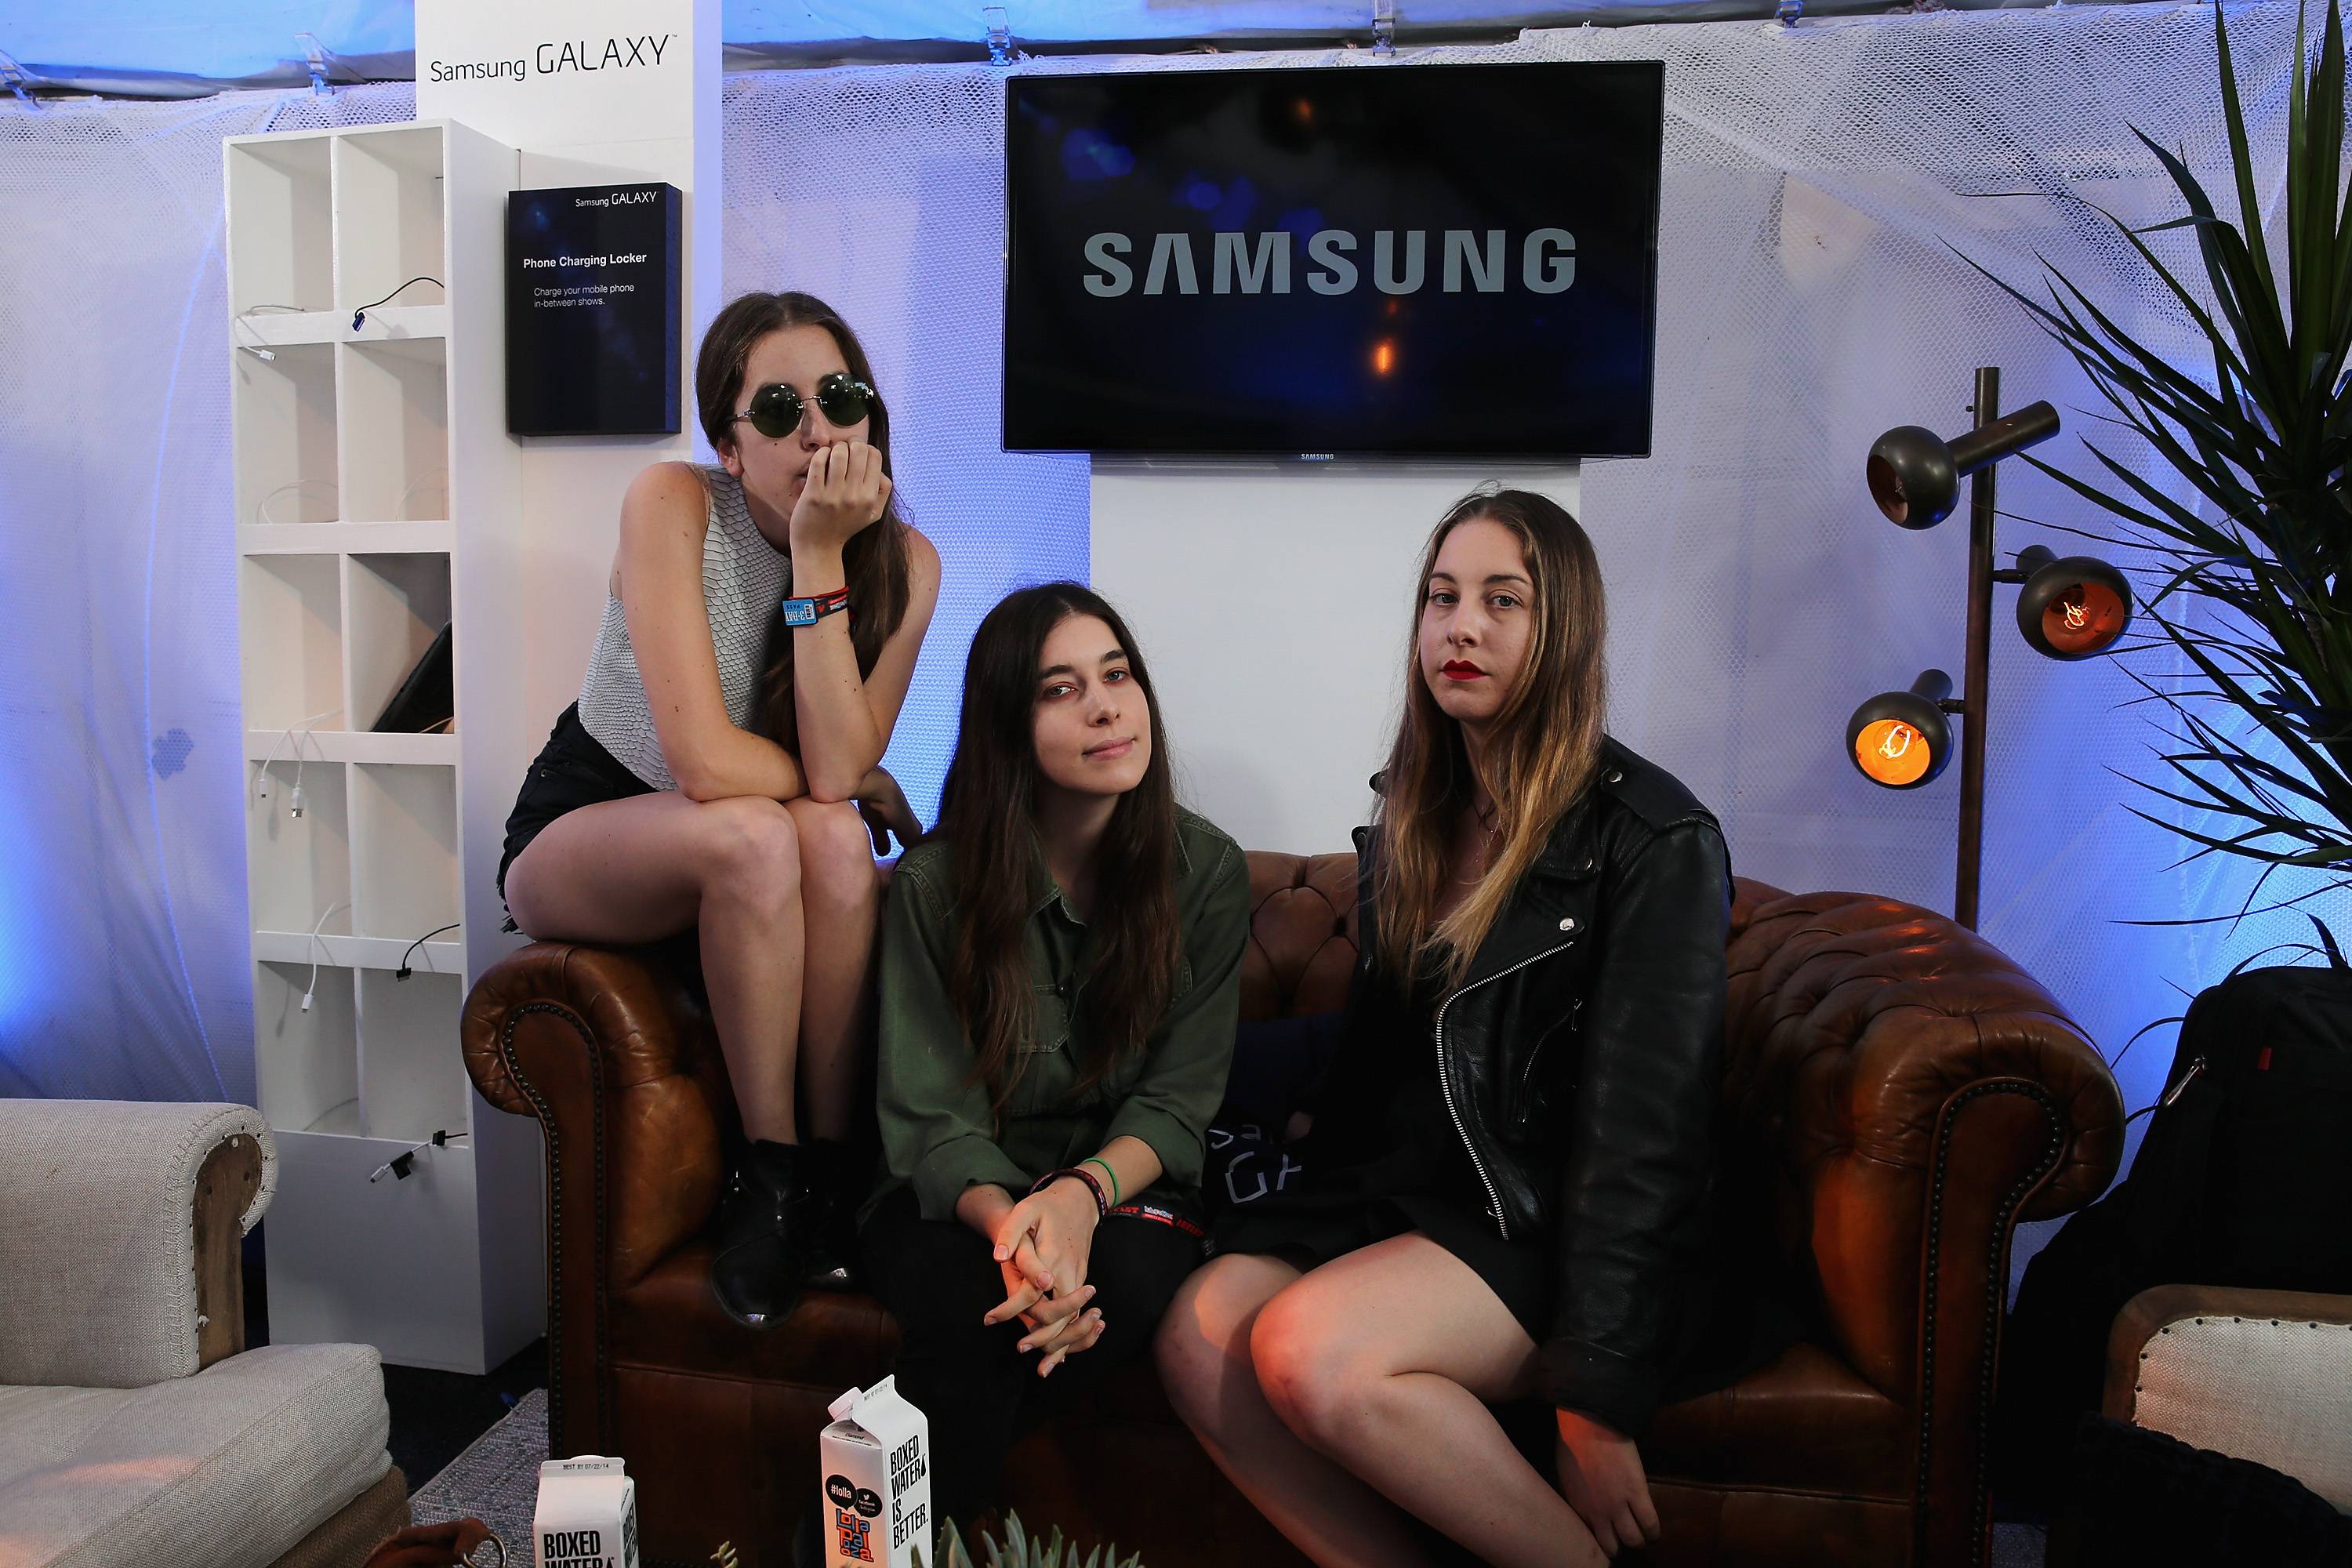 Samsung Galaxy at Lollapalooza - Day 2